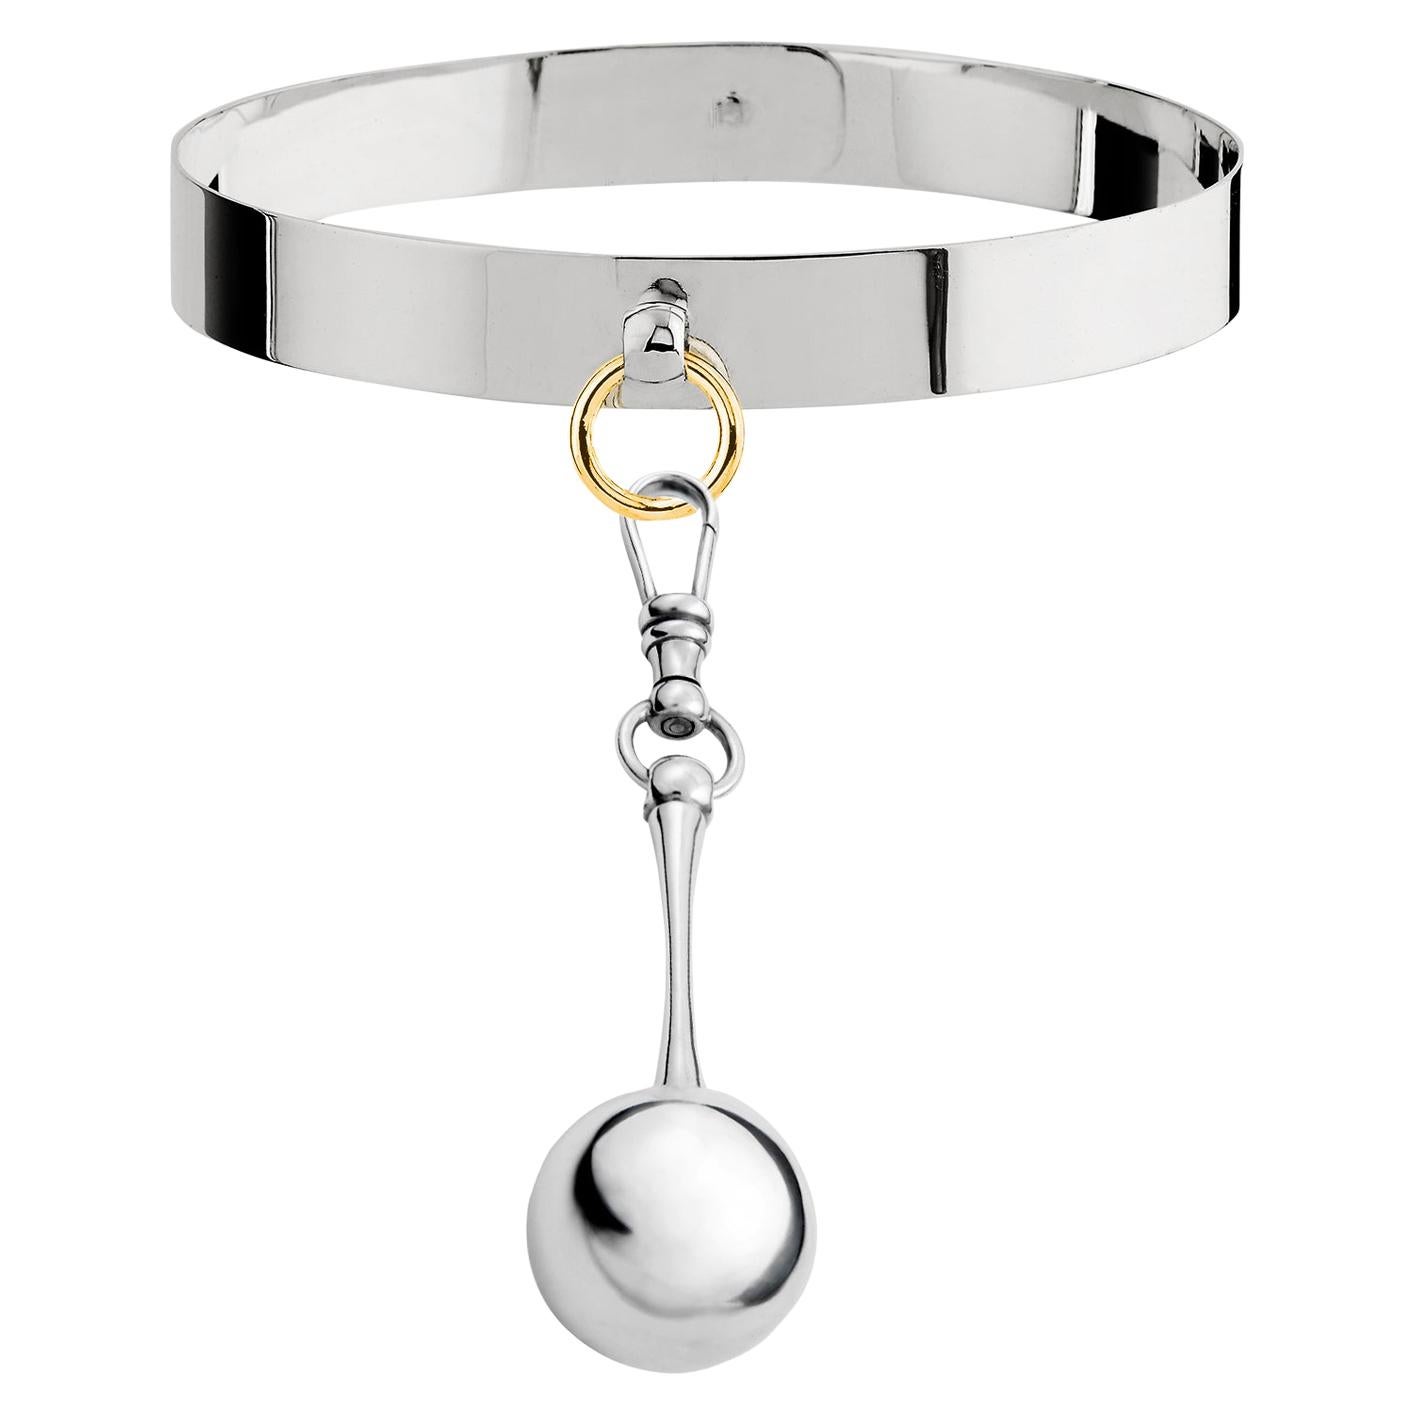 Betony Vernon "O-Ring Choker Spectre Kit" Necklace Pendant Silver 925 in Stock